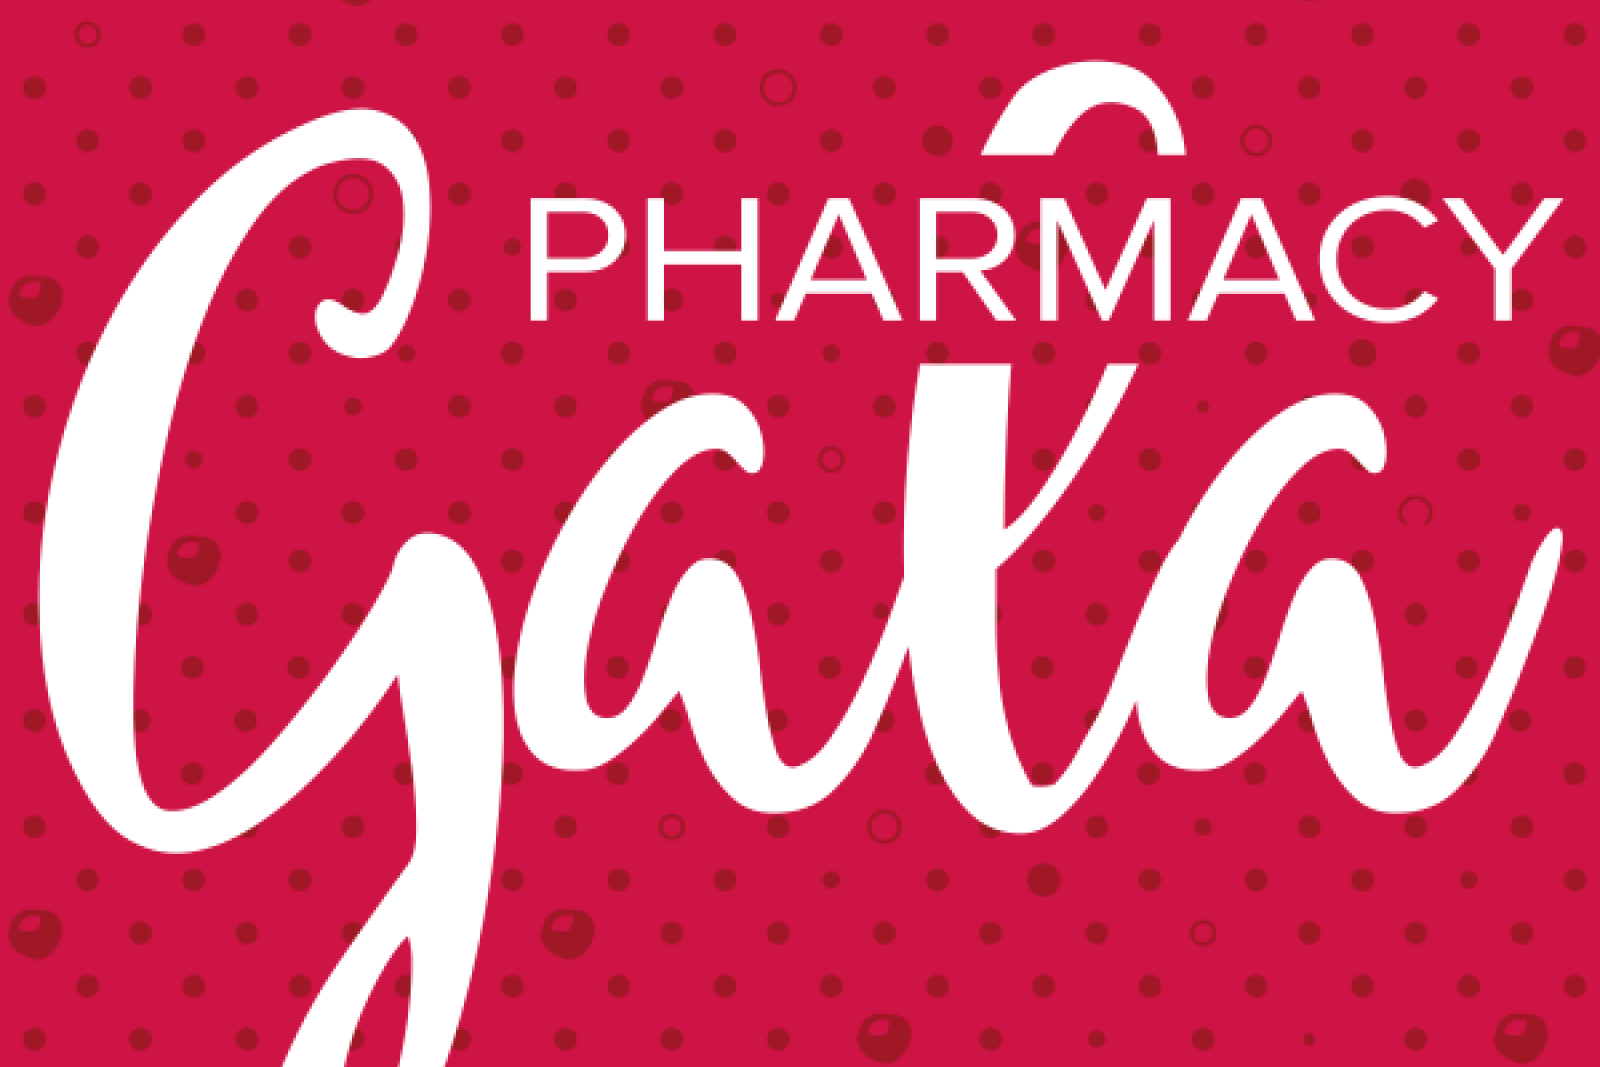 Pharmacy Gala logo